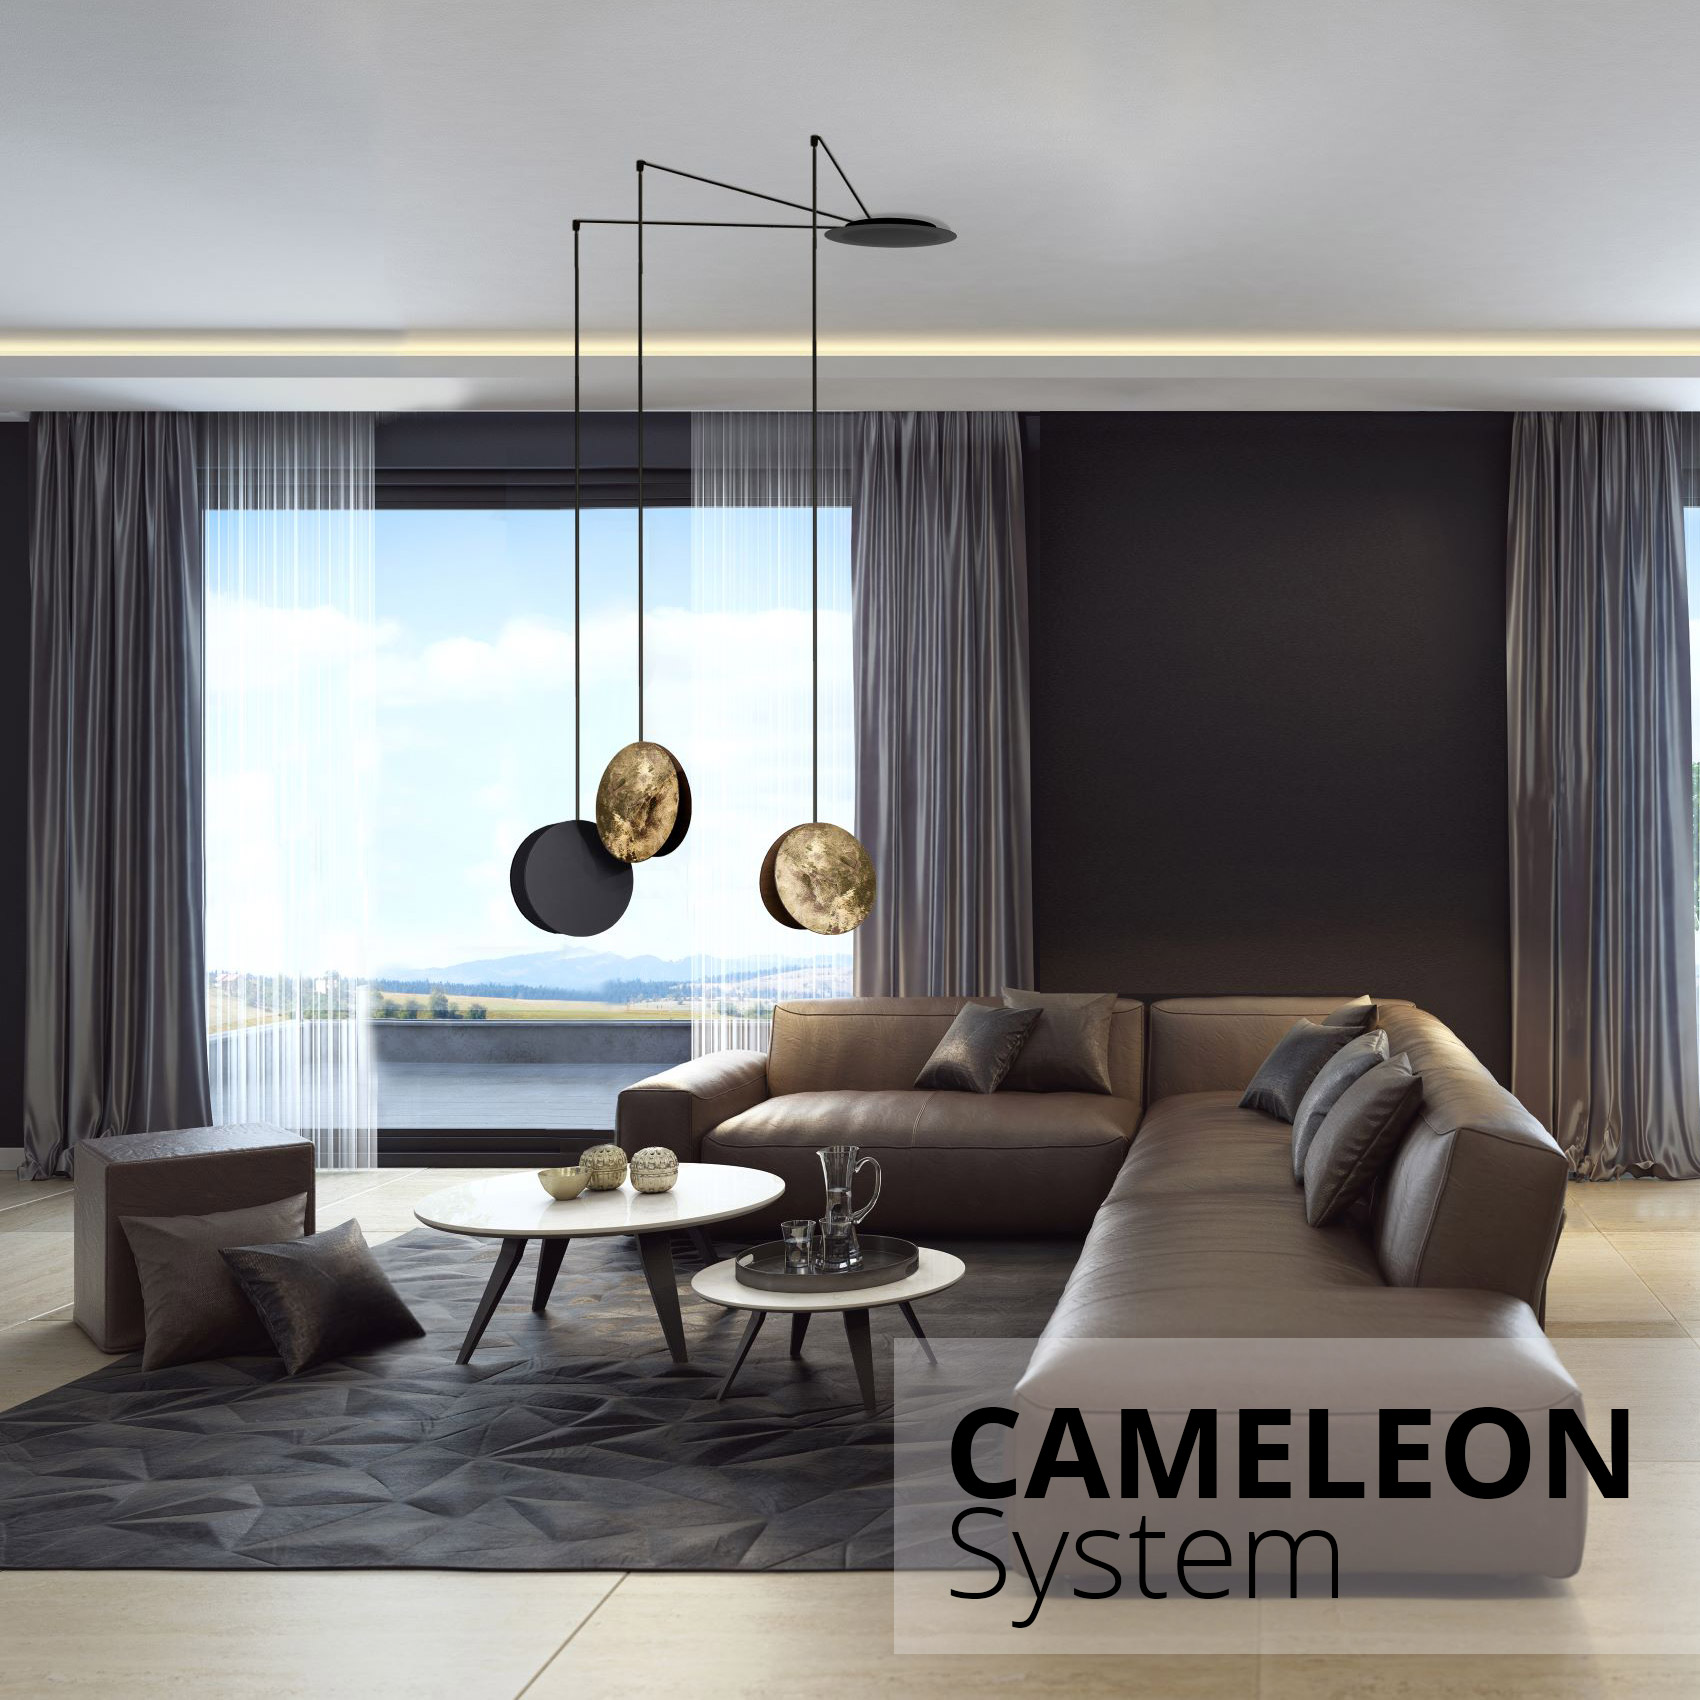 Cameleon System